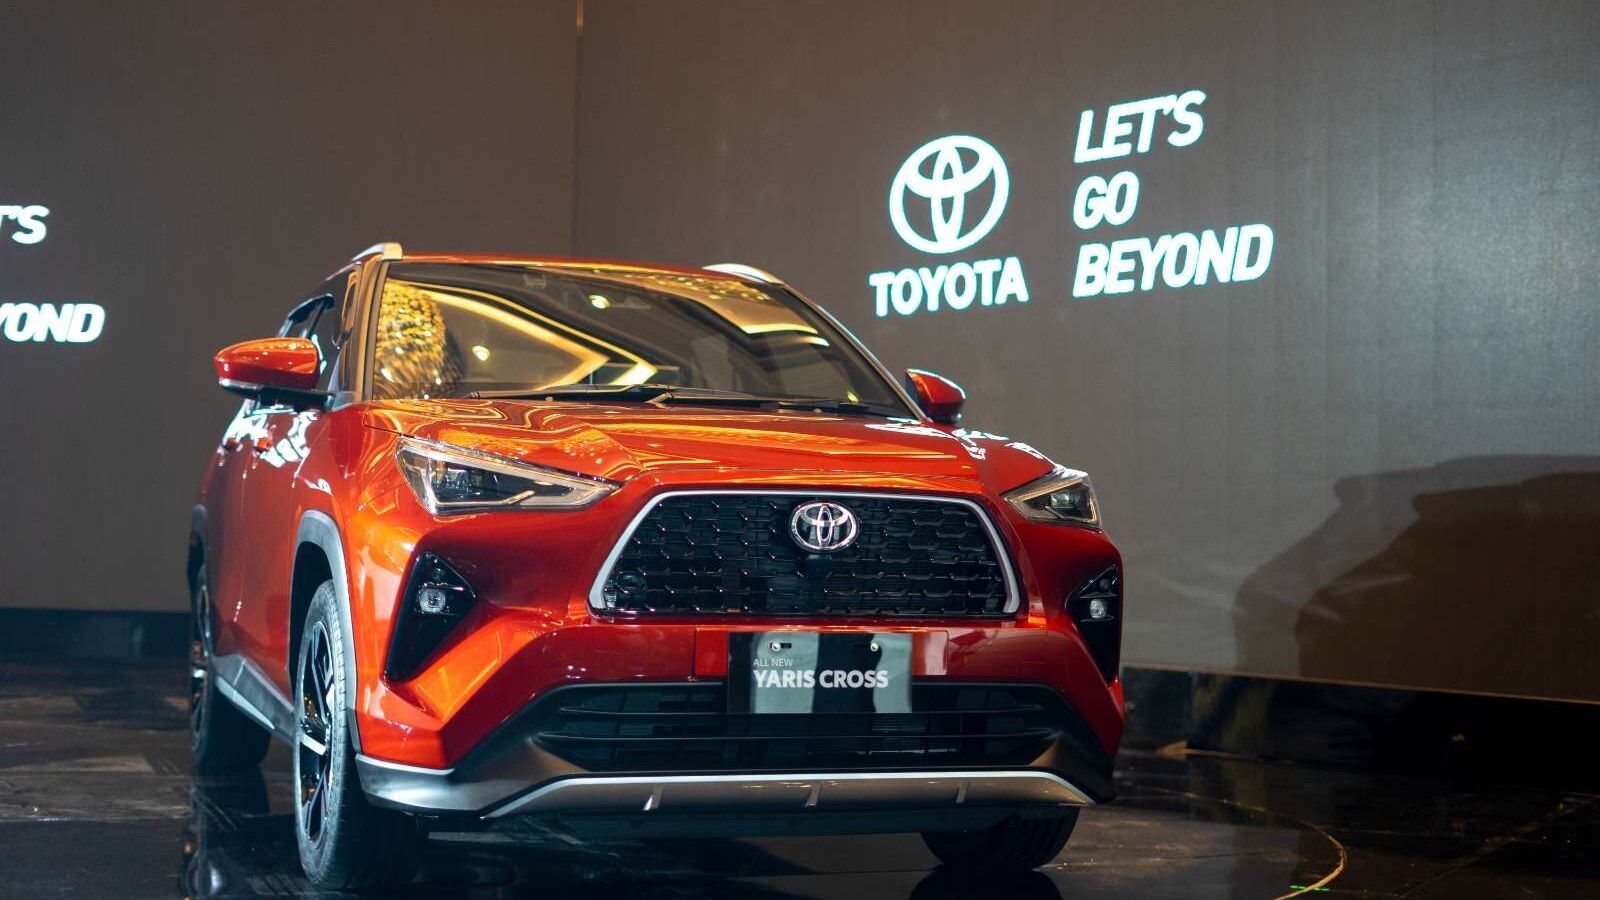 Toyota Yaris Cross SUV breaks cover, aims to challenge Hyundai